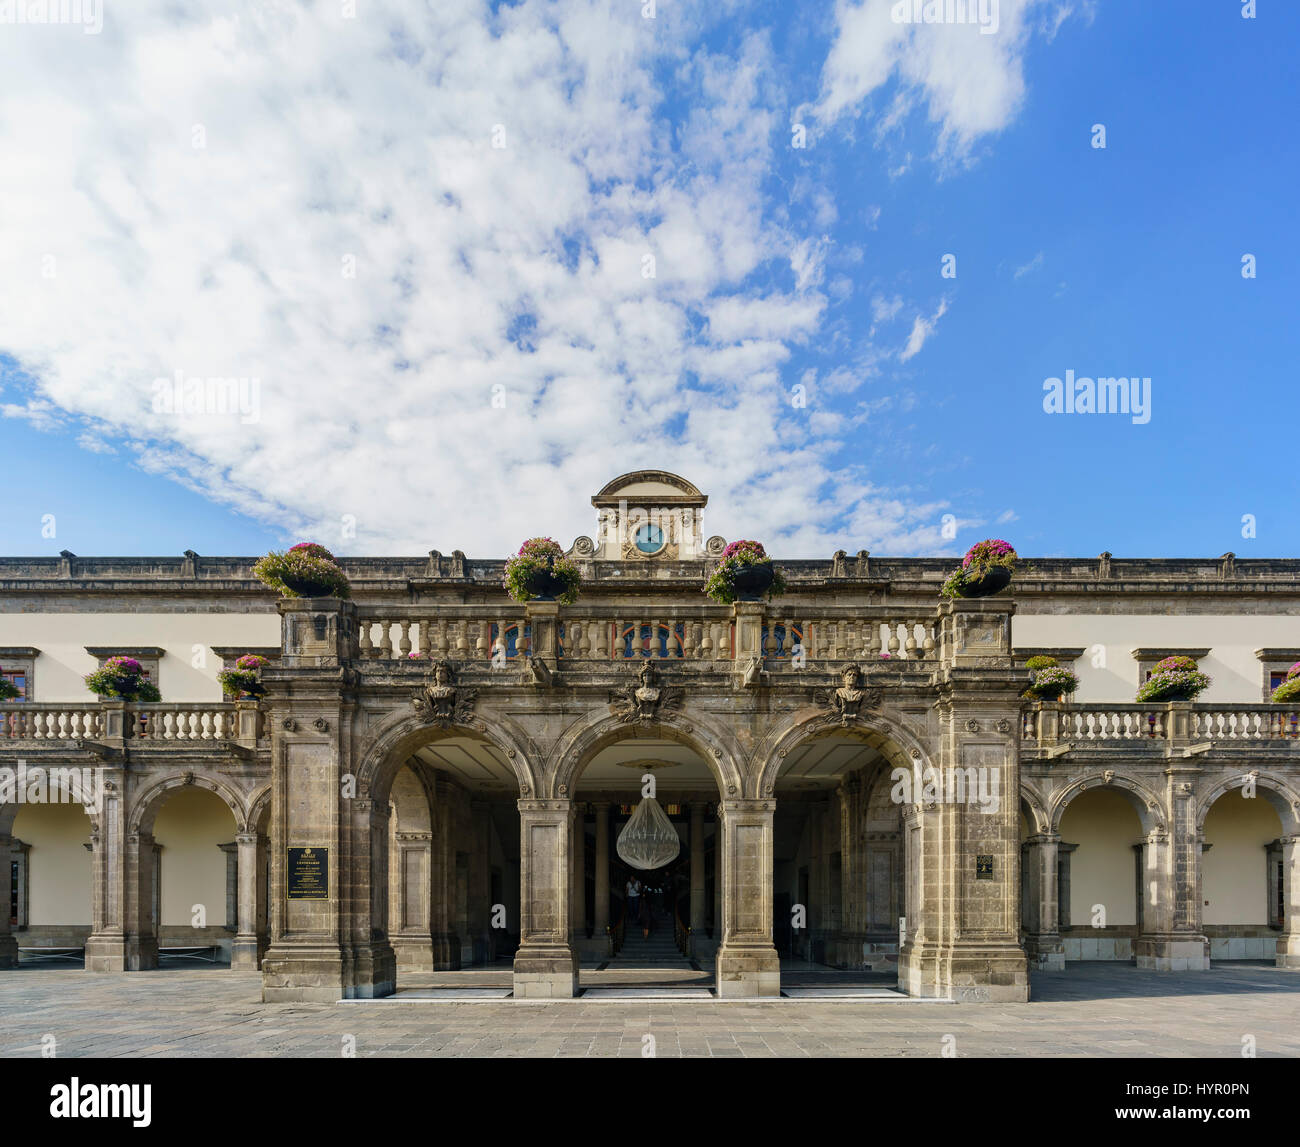 Mexico City, FEB 17: The historical castle - Chapultepec Castle on FEB 17, 2017 at Mexico City Stock Photo